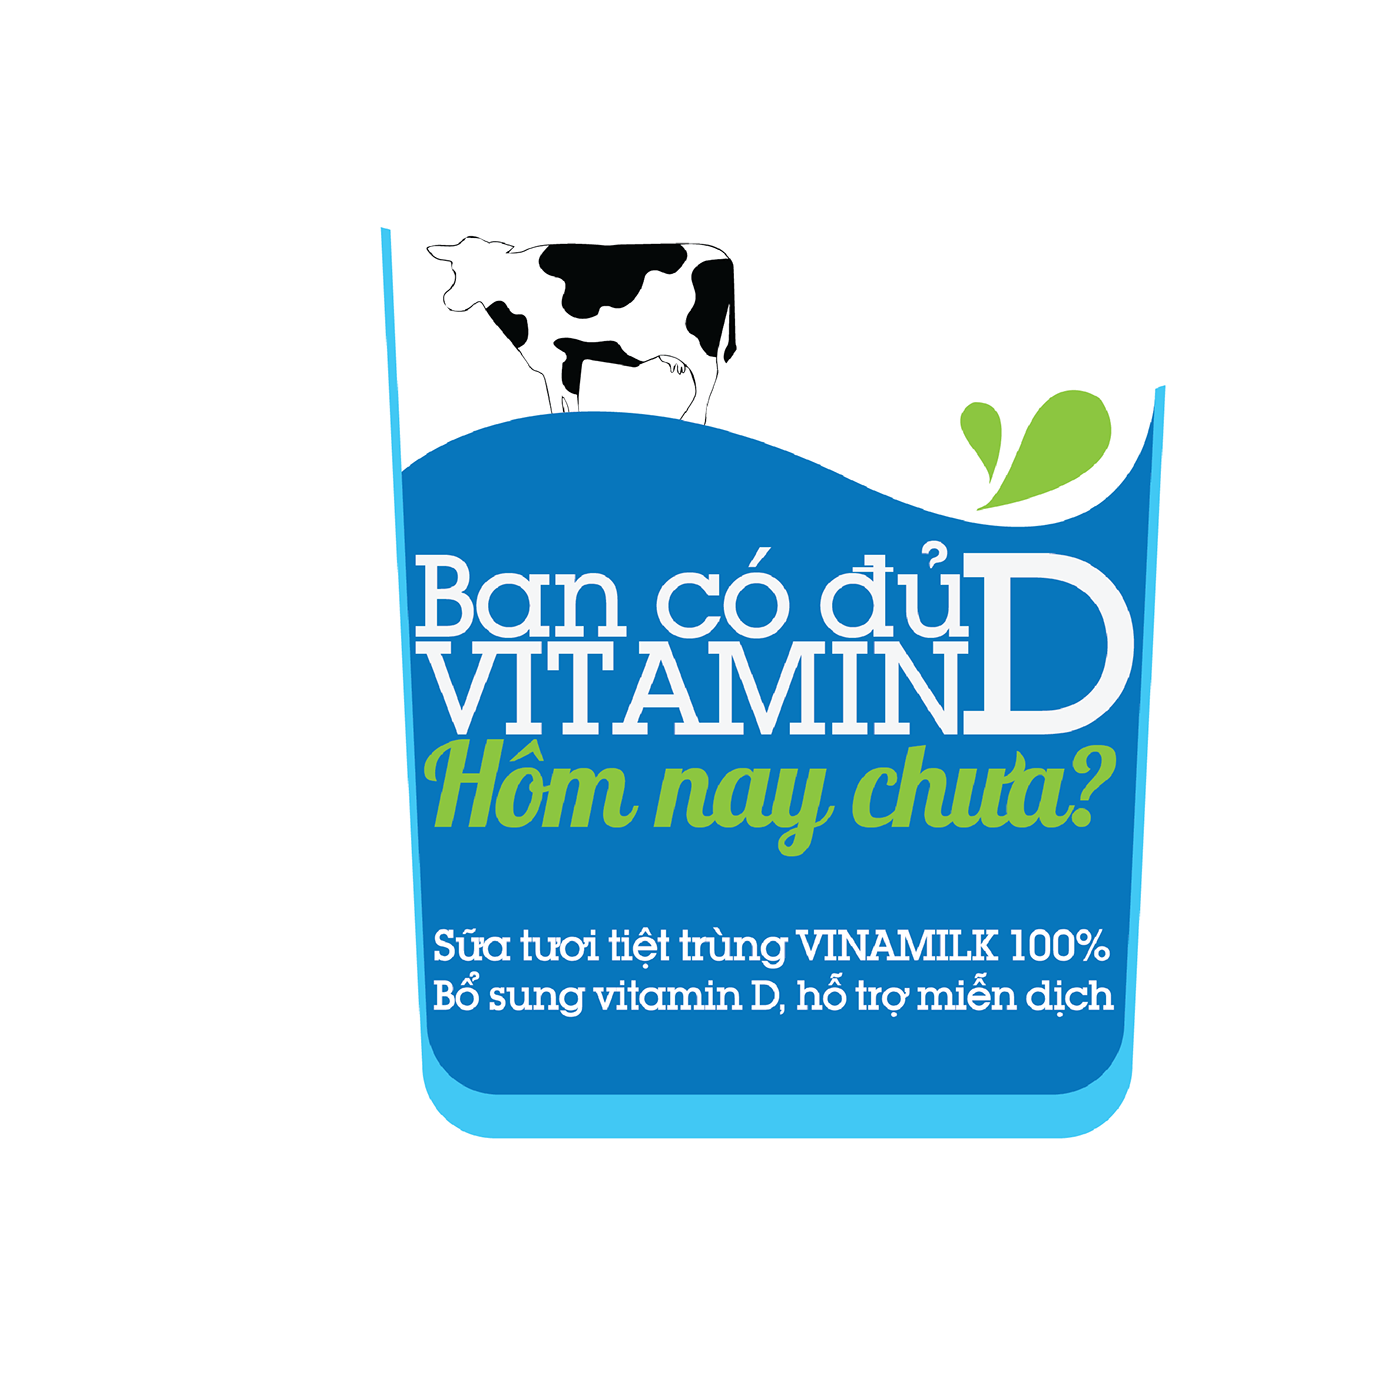 -Vinamilk is the largest dair